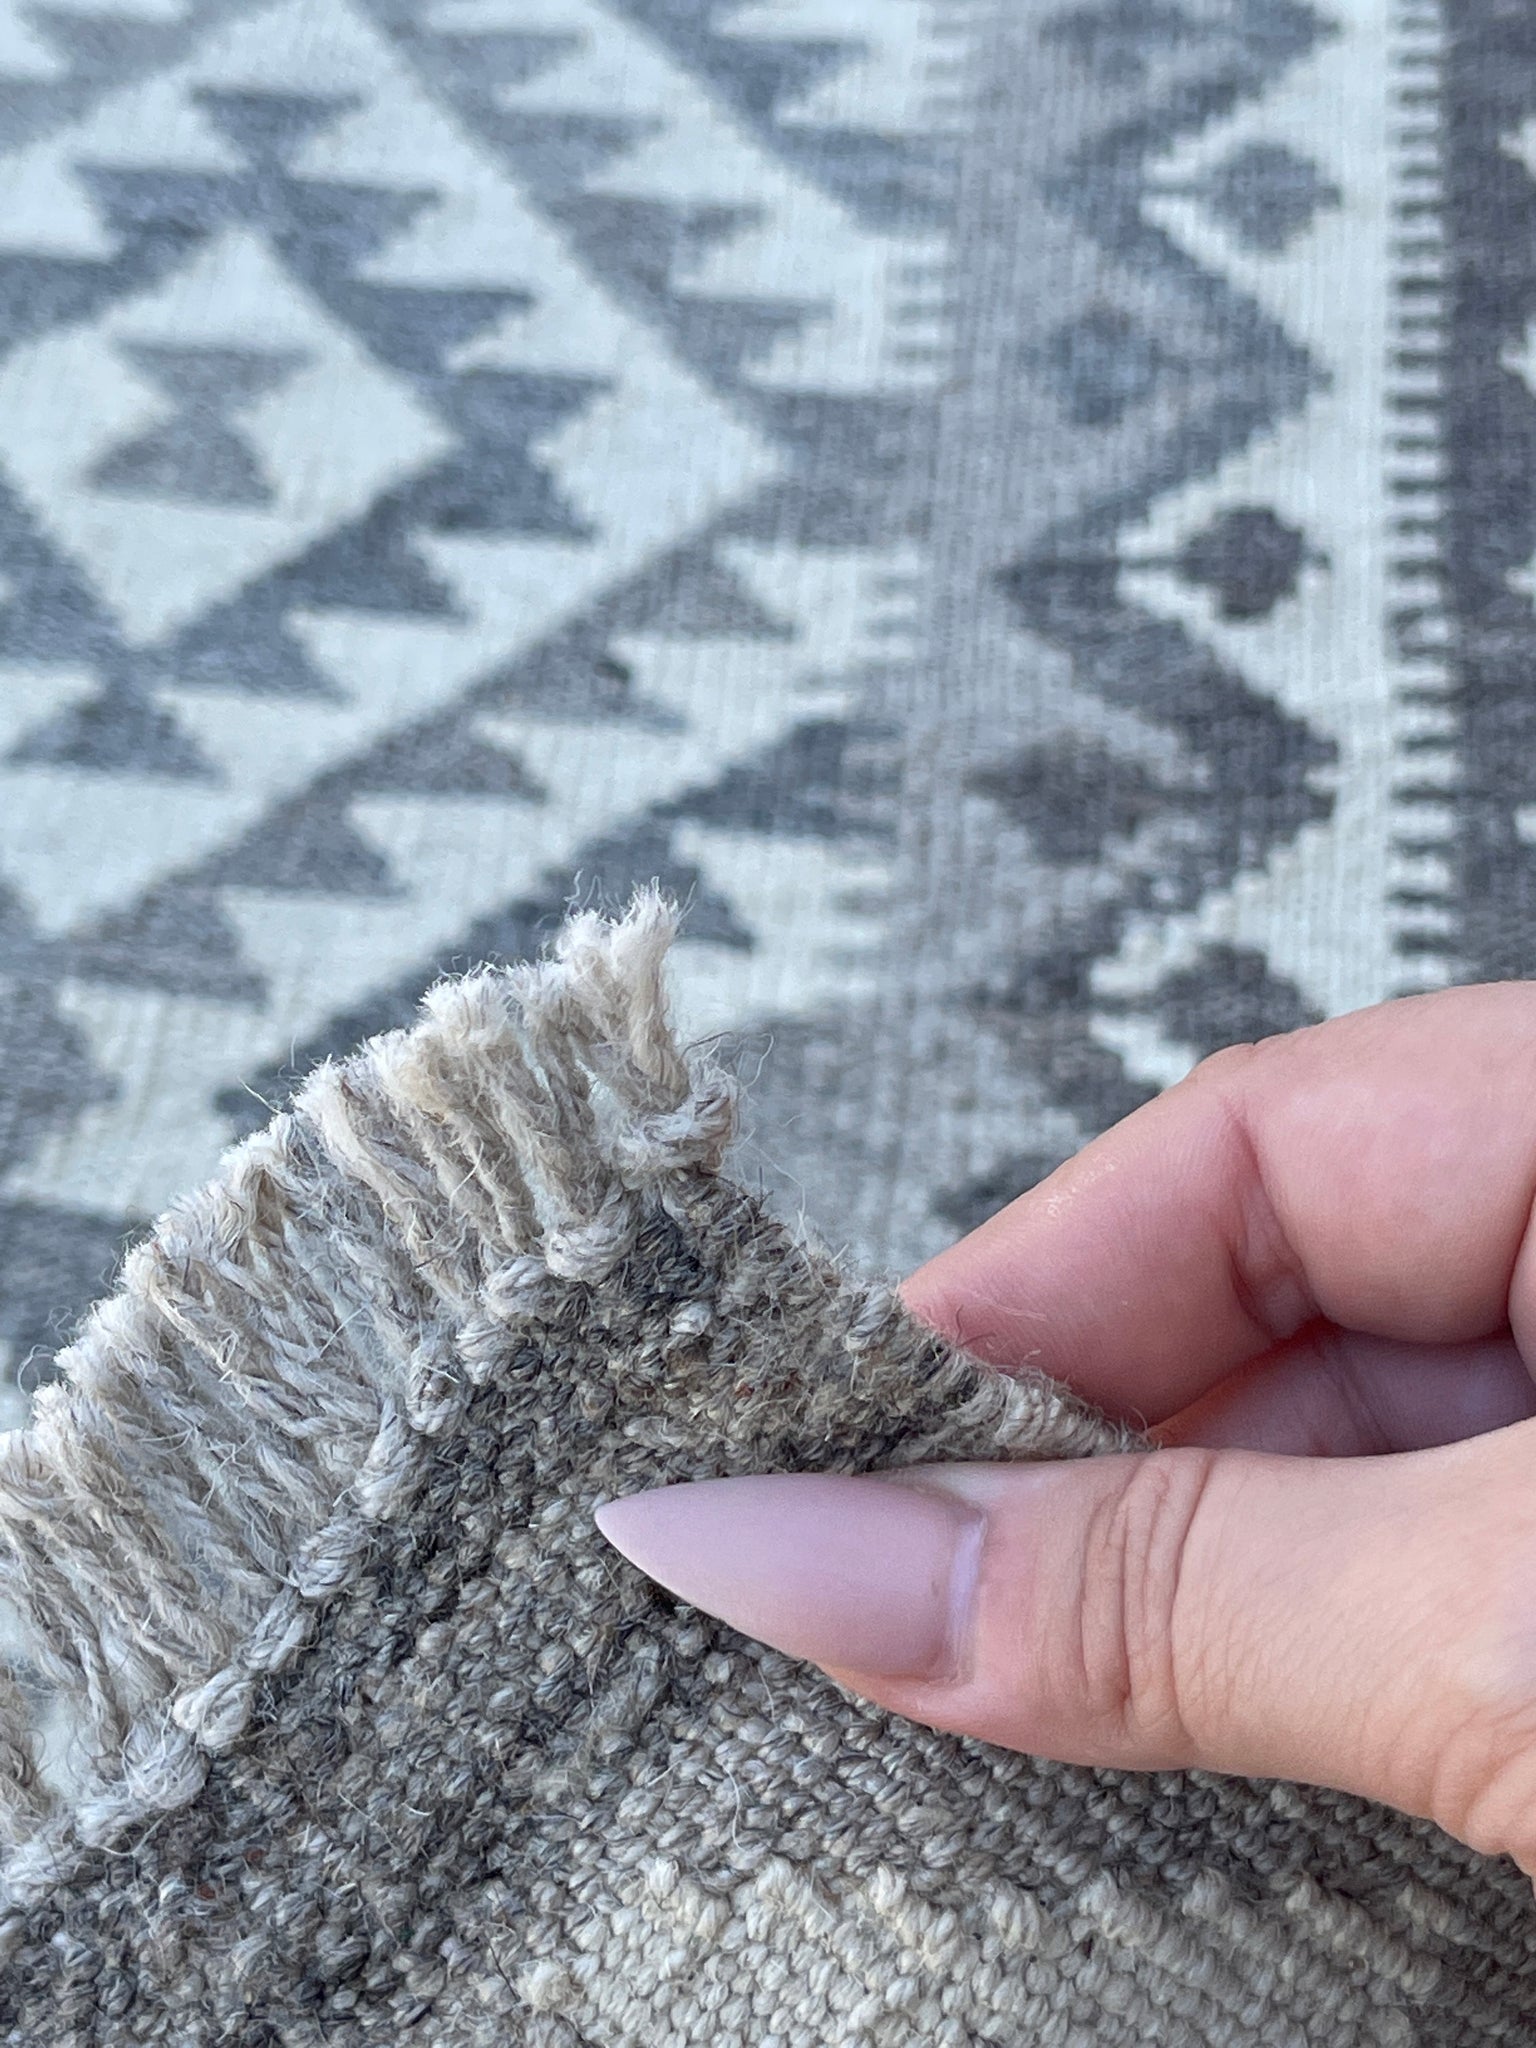 3x10 (90x305) Handmade Afghan Kilim Runner Rug 